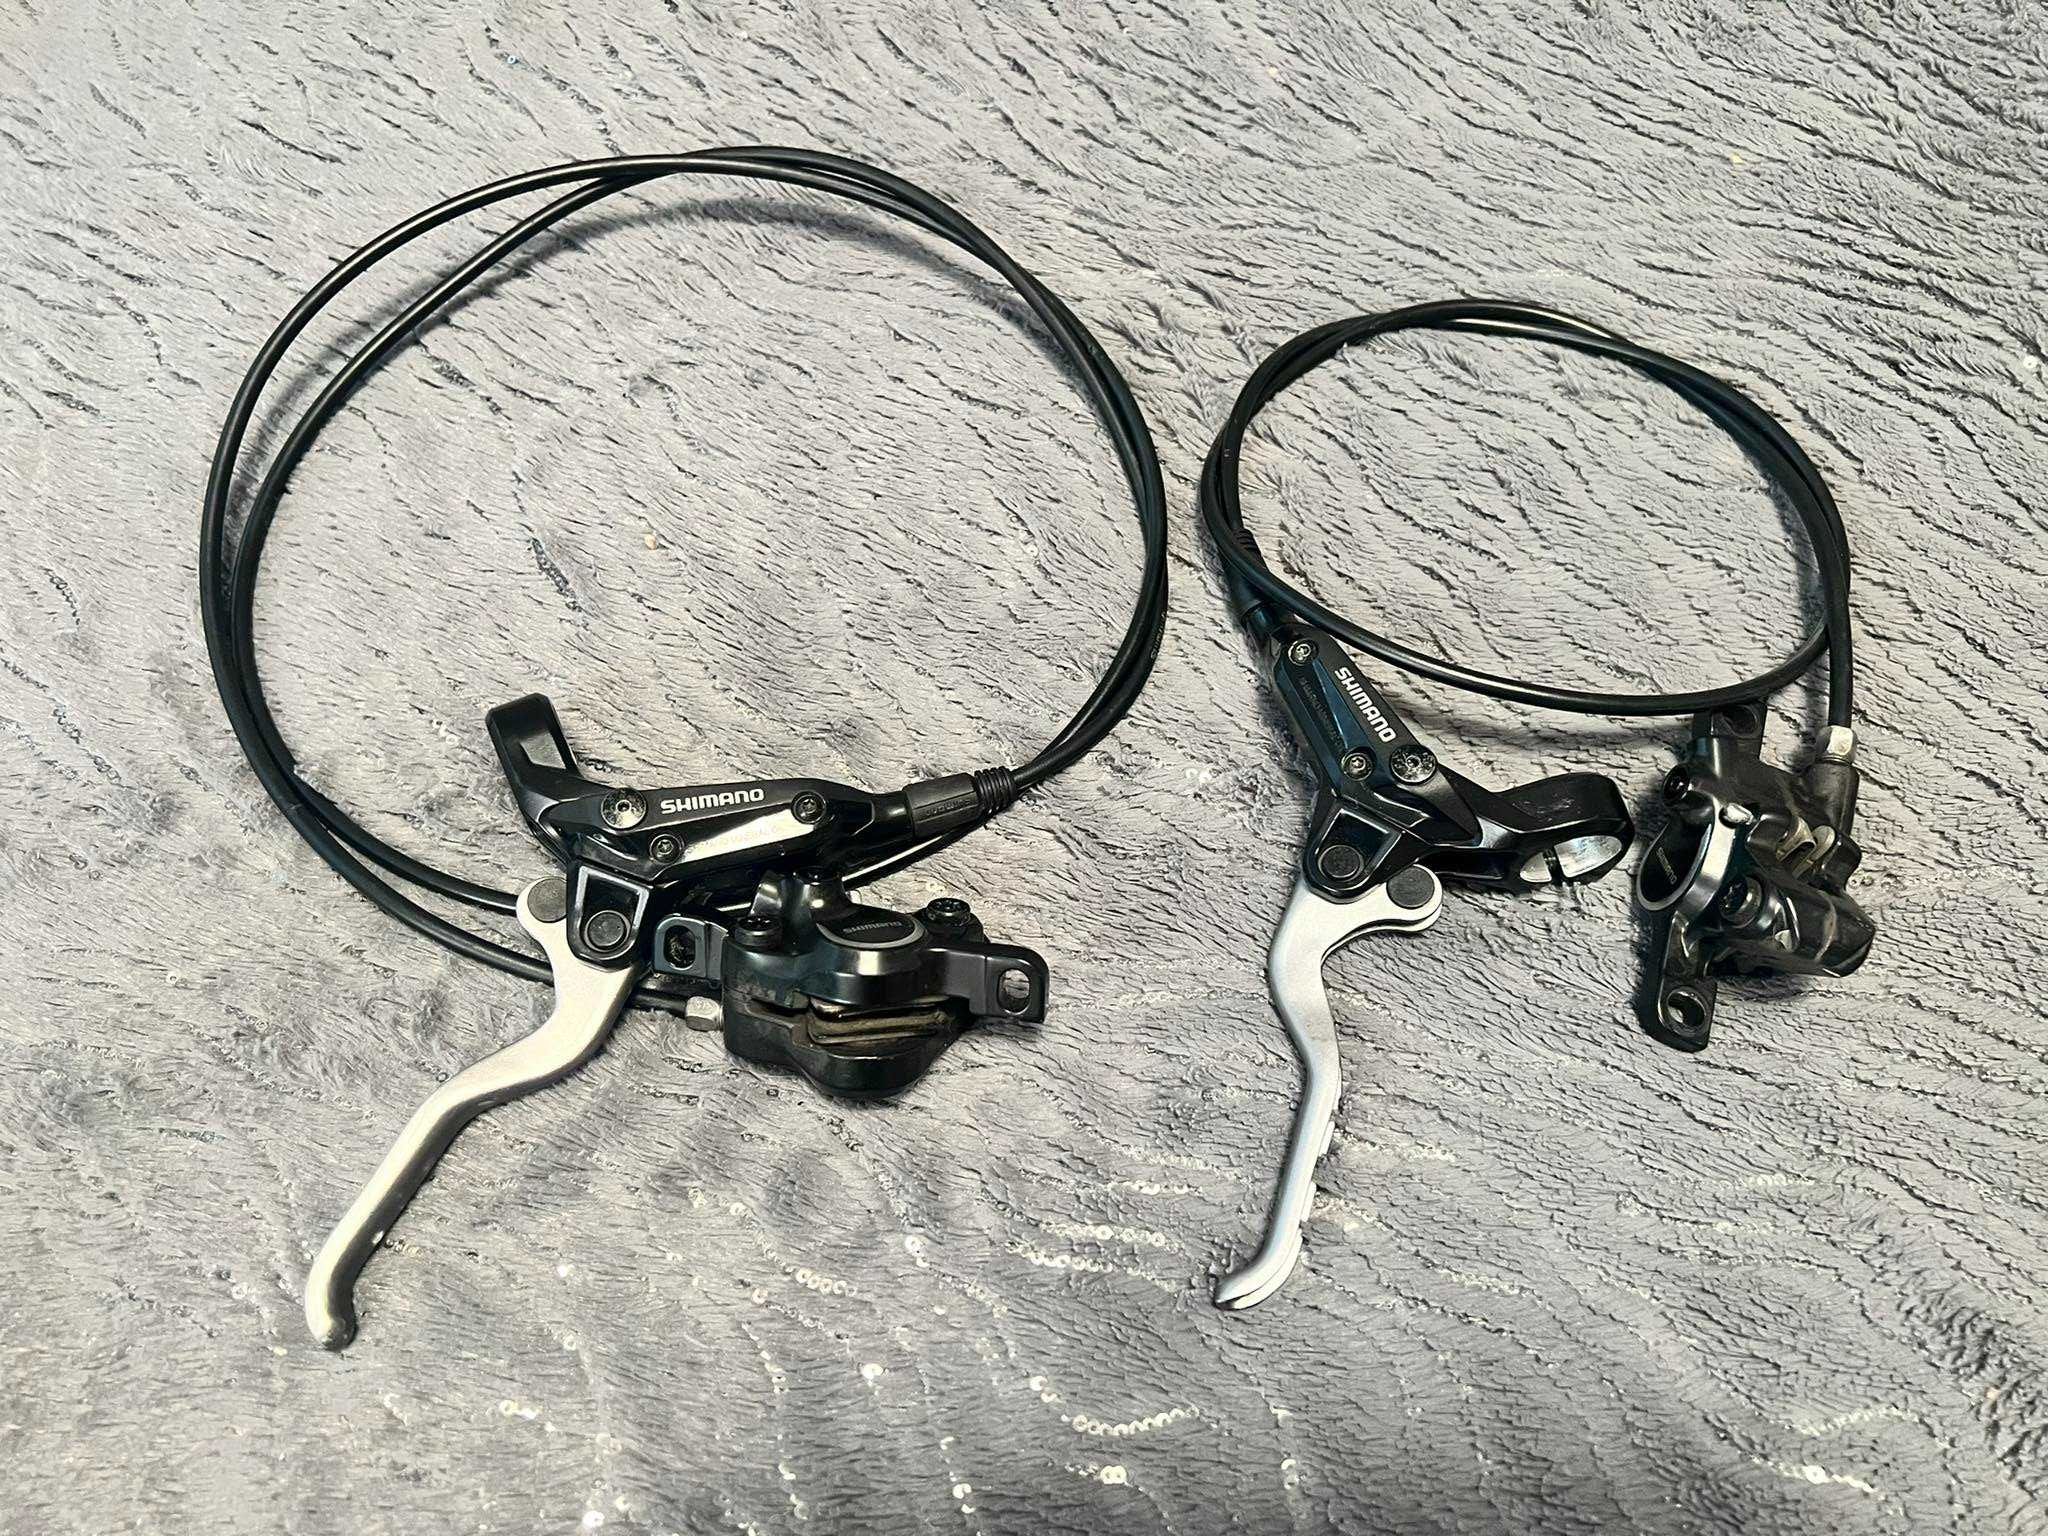 Hamulce Shimano BR-M365 P+T, klamki, zaciski, klocki, zakute i zalane